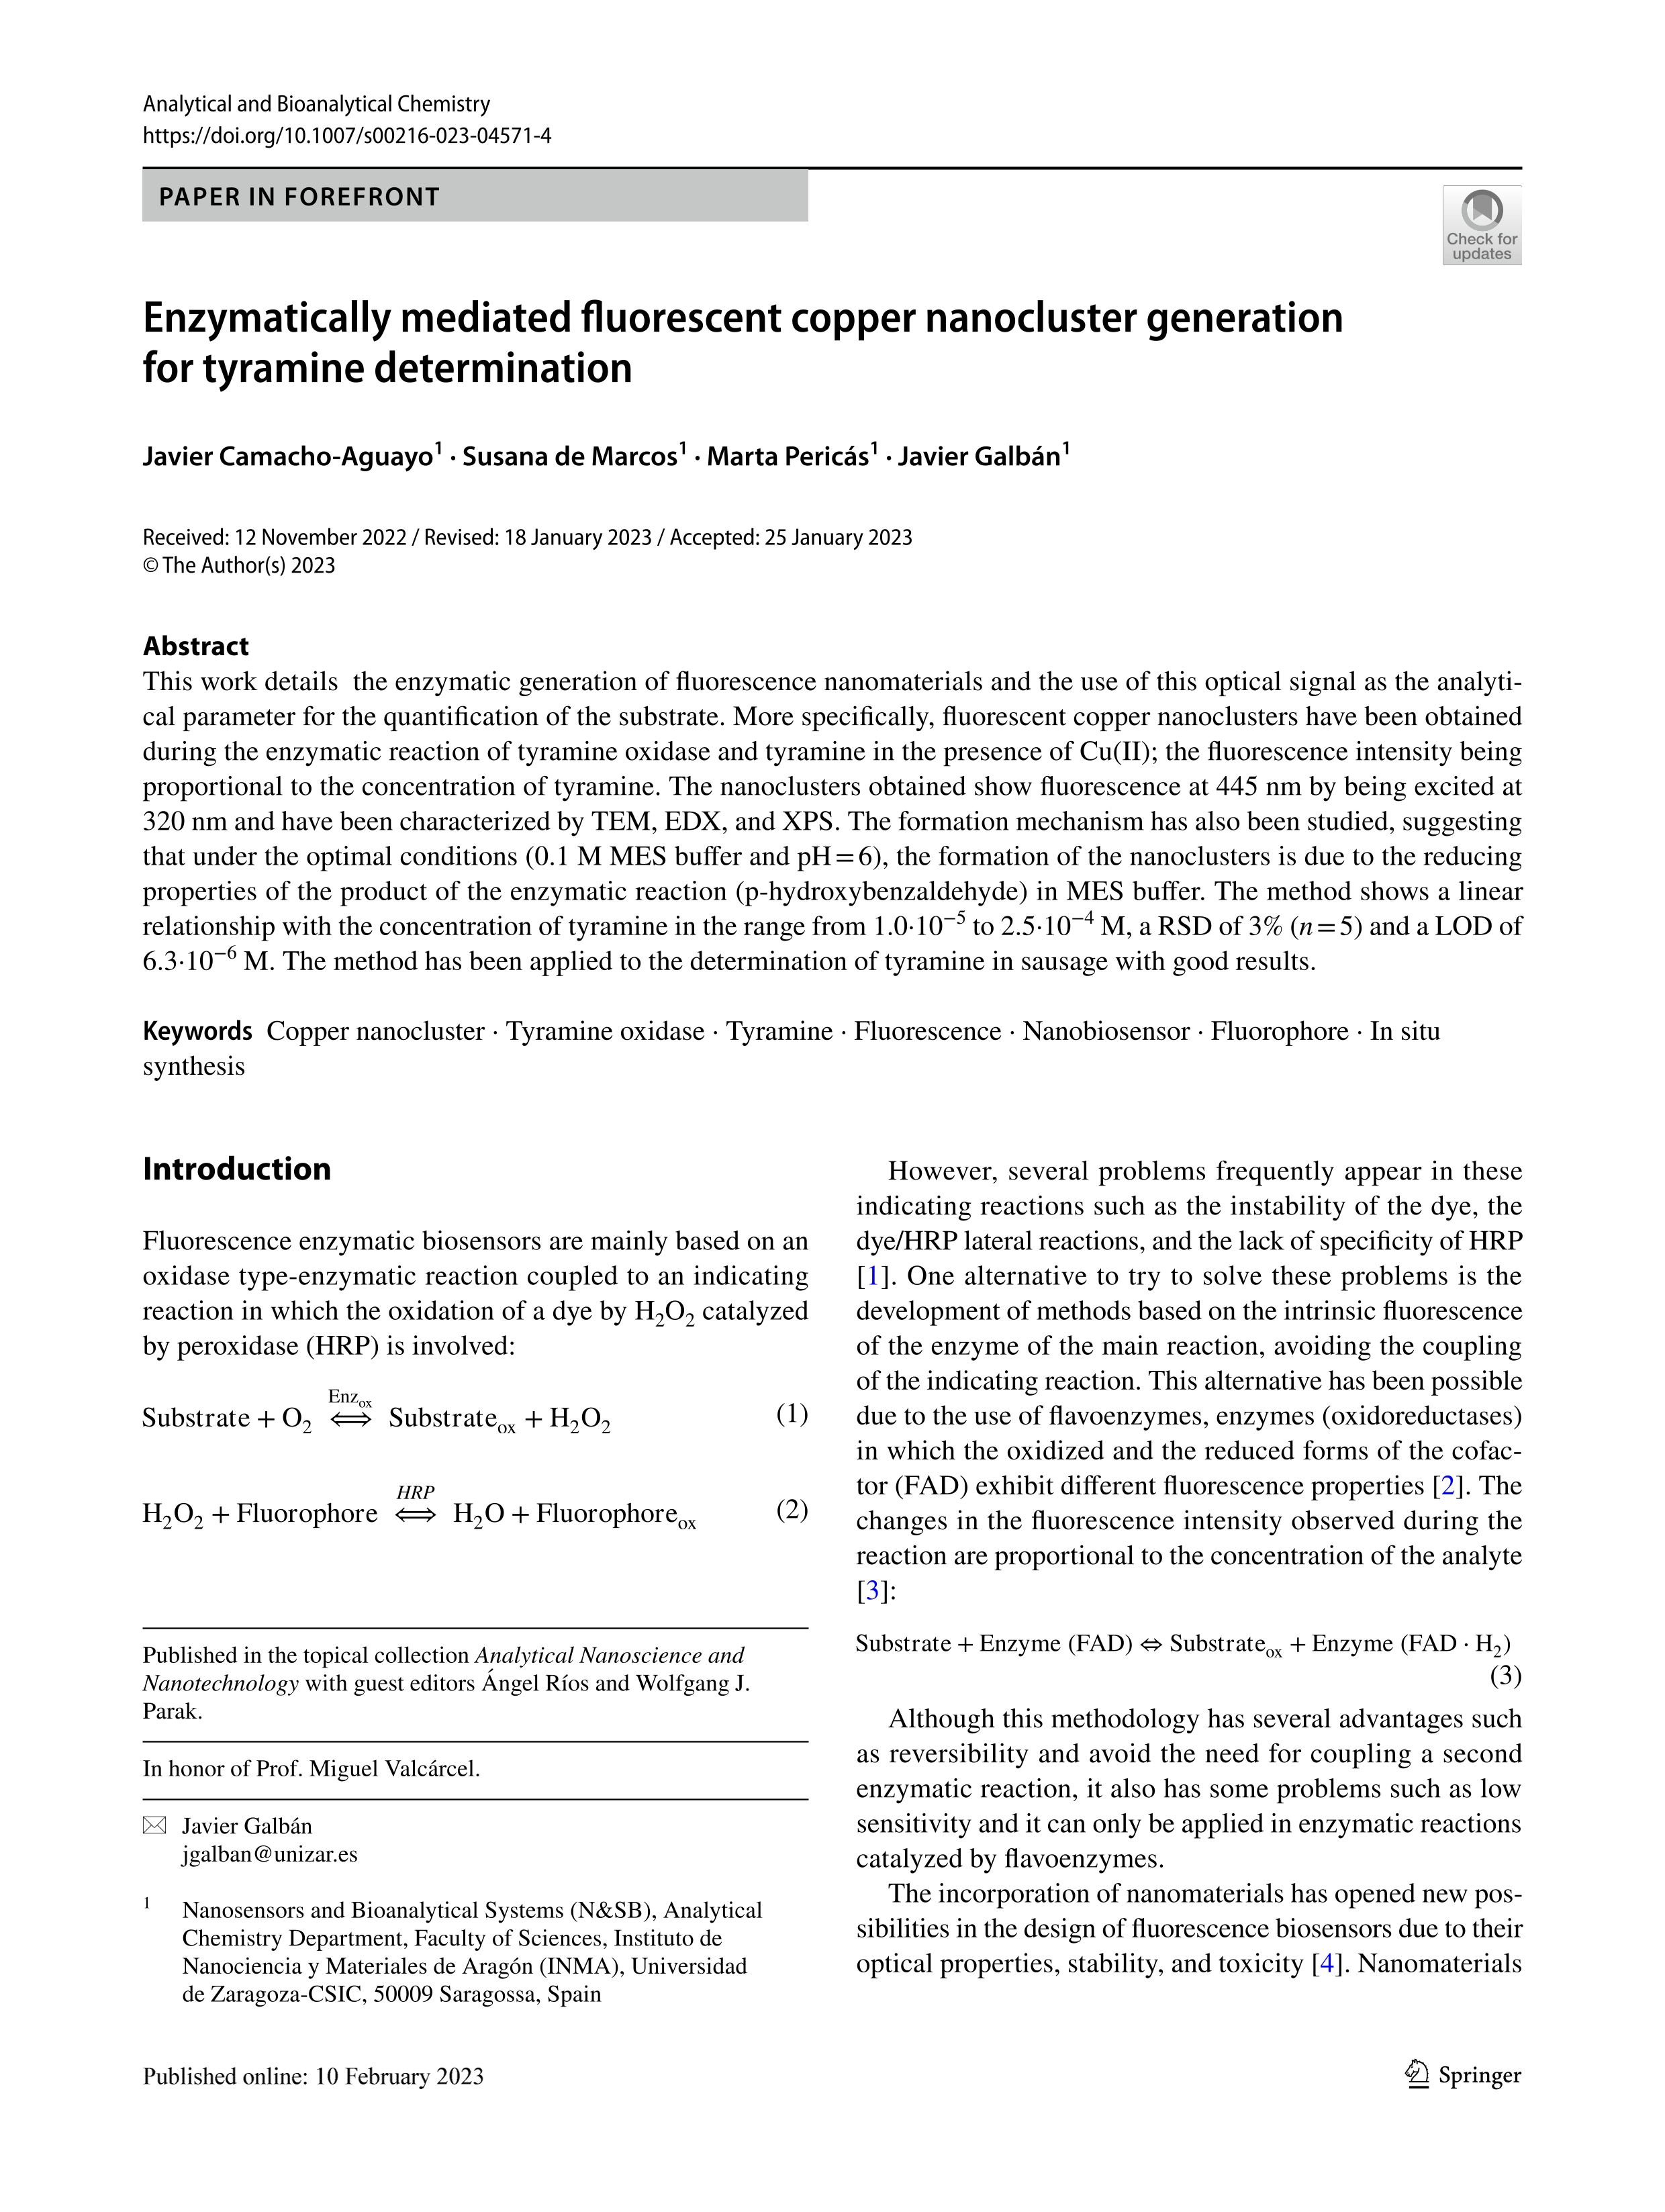 Enzymatically mediated fluorescent copper nanocluster generation for tyramine determination